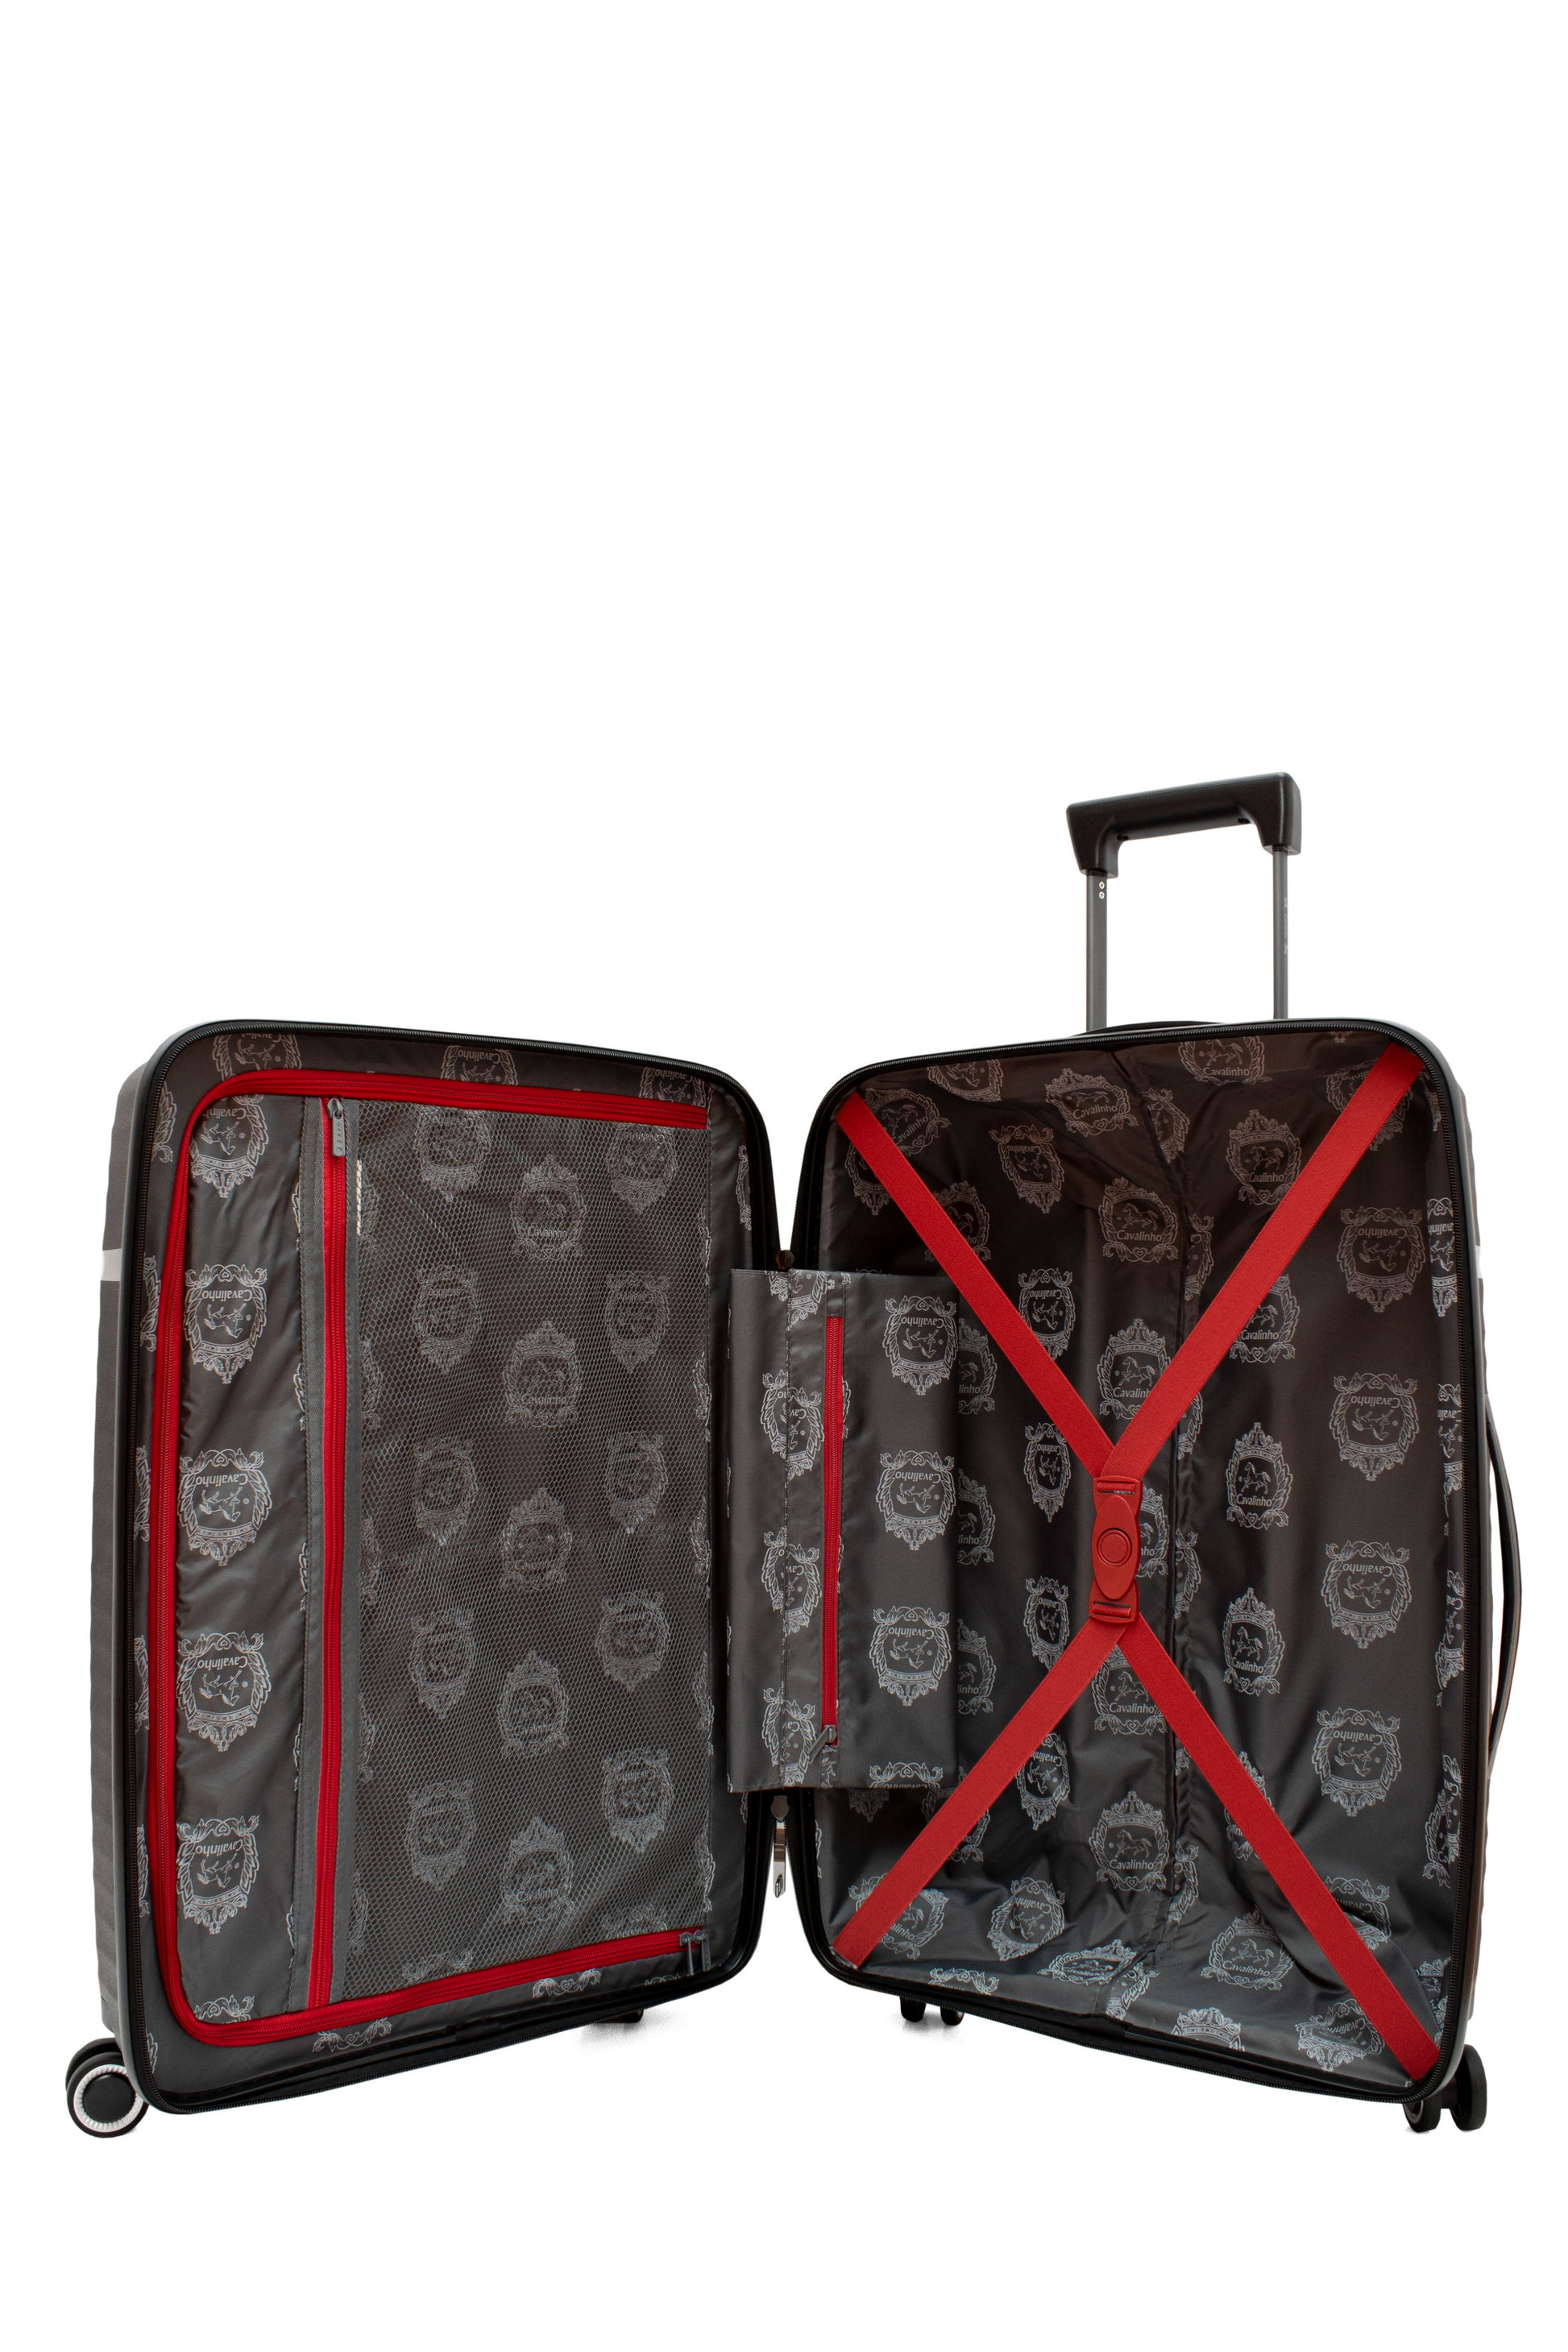 Cavalinho Check-in Hardside Luggage (24" or 28") - 24 inch Black - 68010003.01.24_4